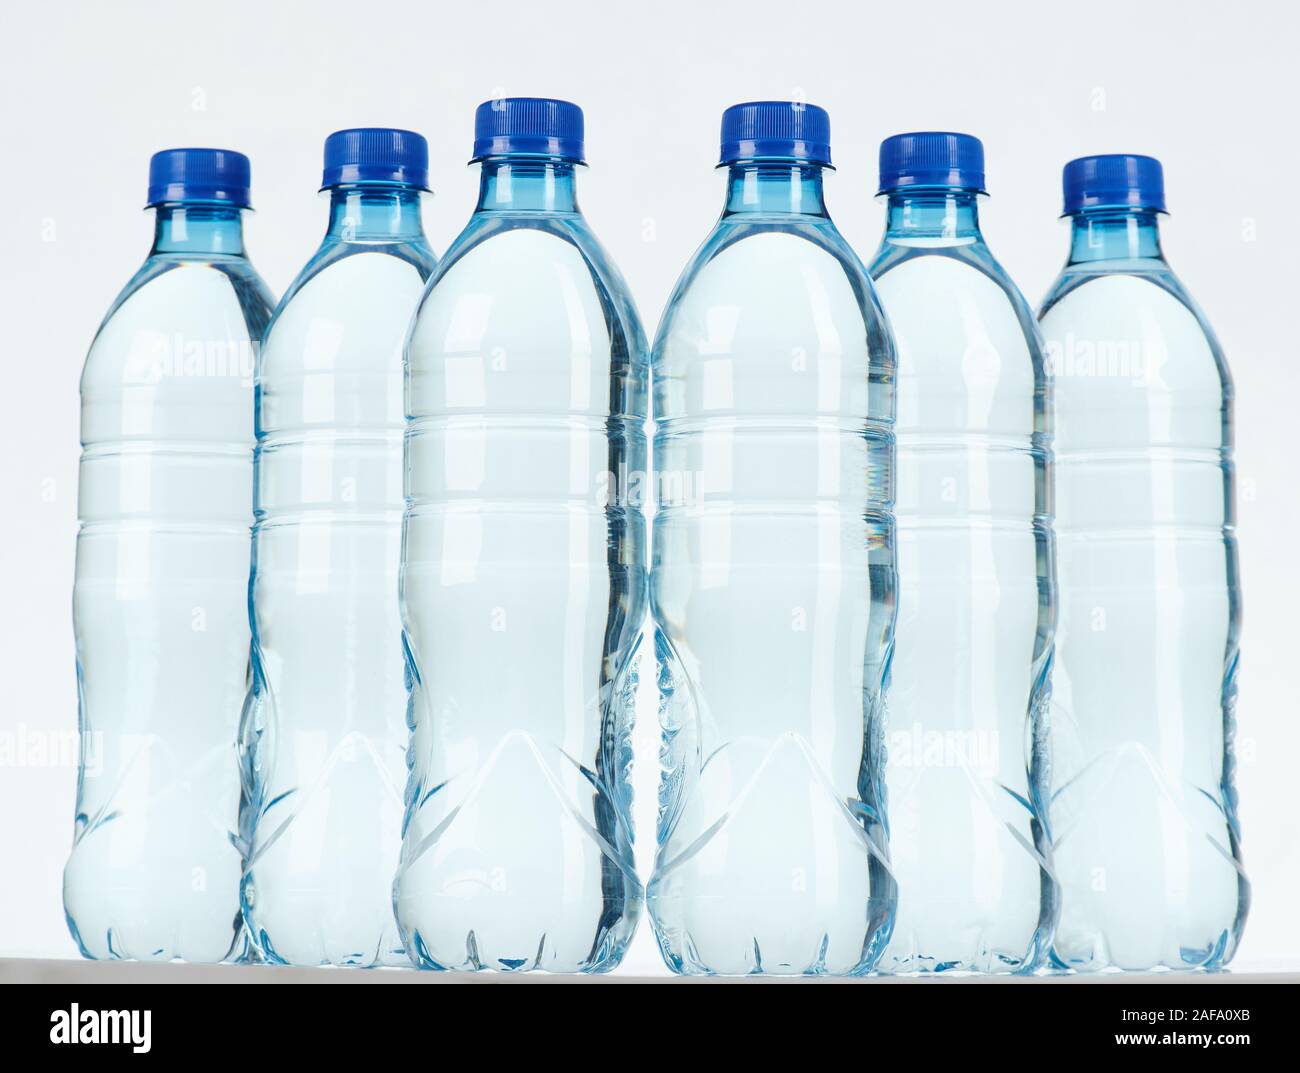 Group of plastic bottles isolated on white background Stock Photo